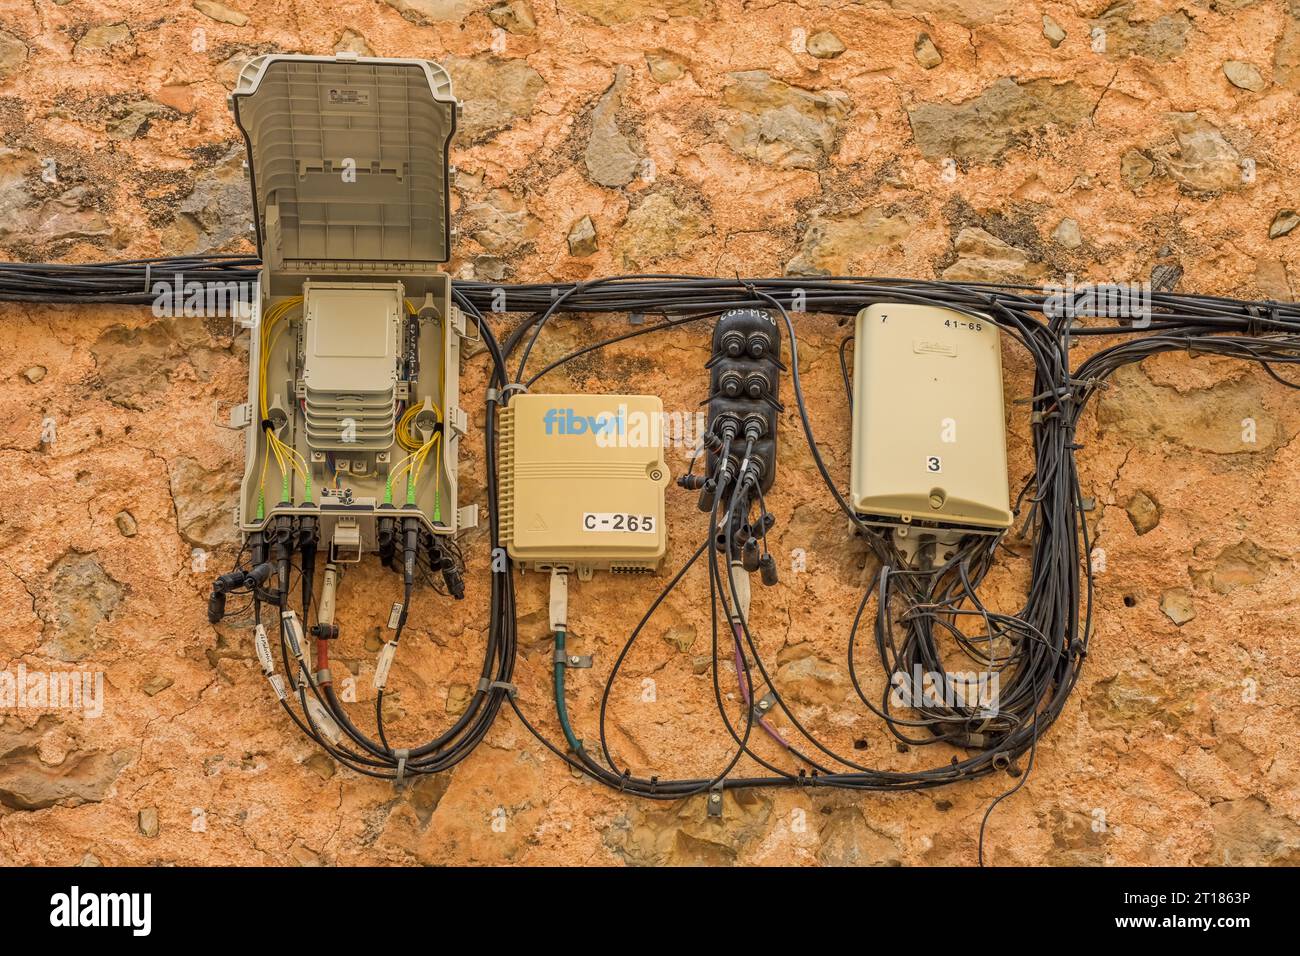 Strom und Telekommunikation, Kabel, Kabelsalat, Hauswand, Mallorca, Spanien Stock Photo